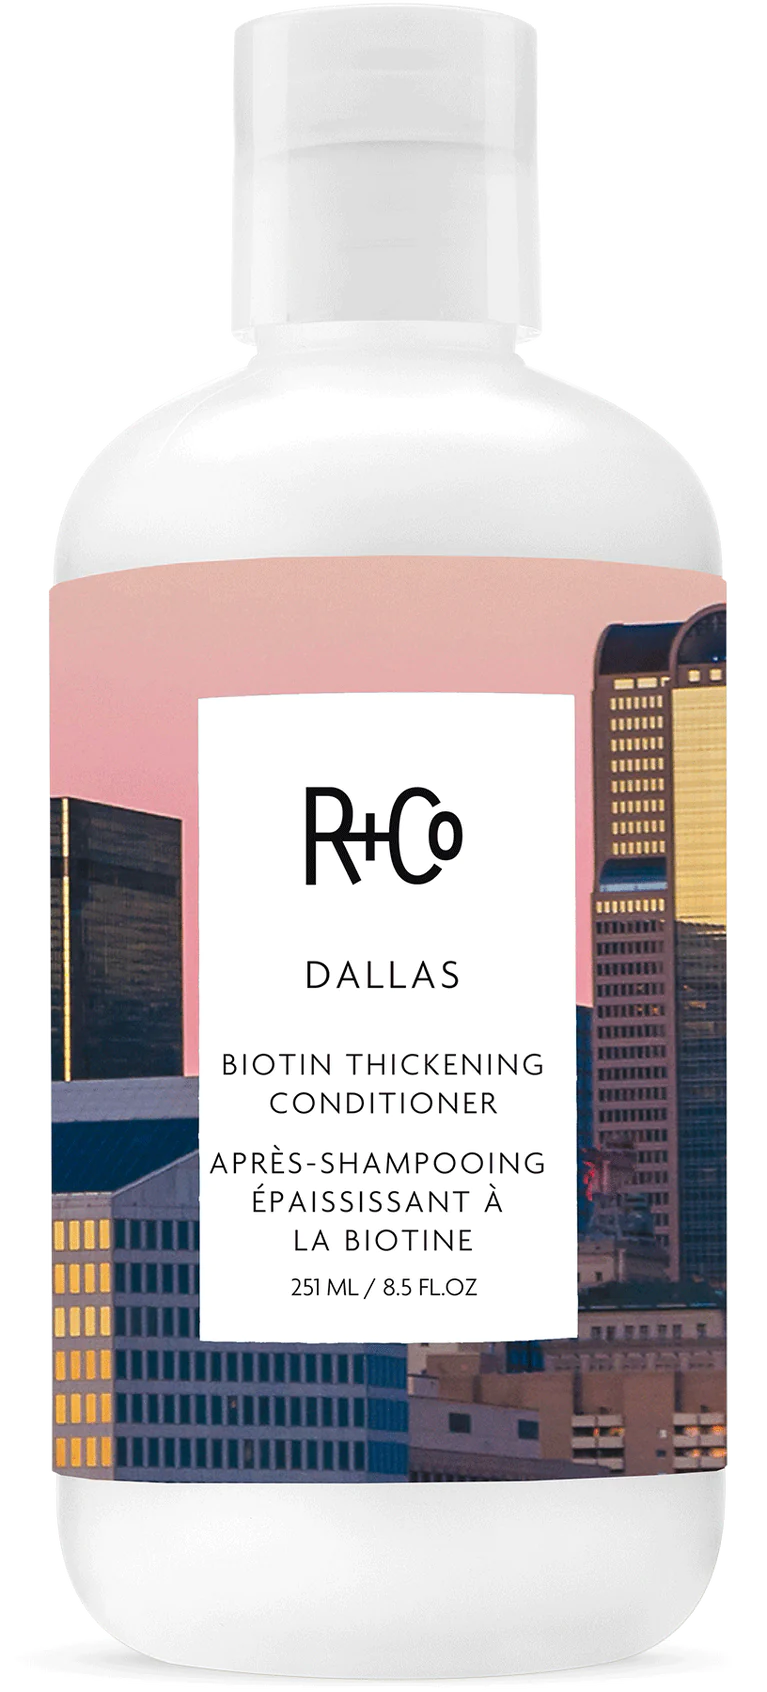 R+Co Dallas biotin thickening conditioner